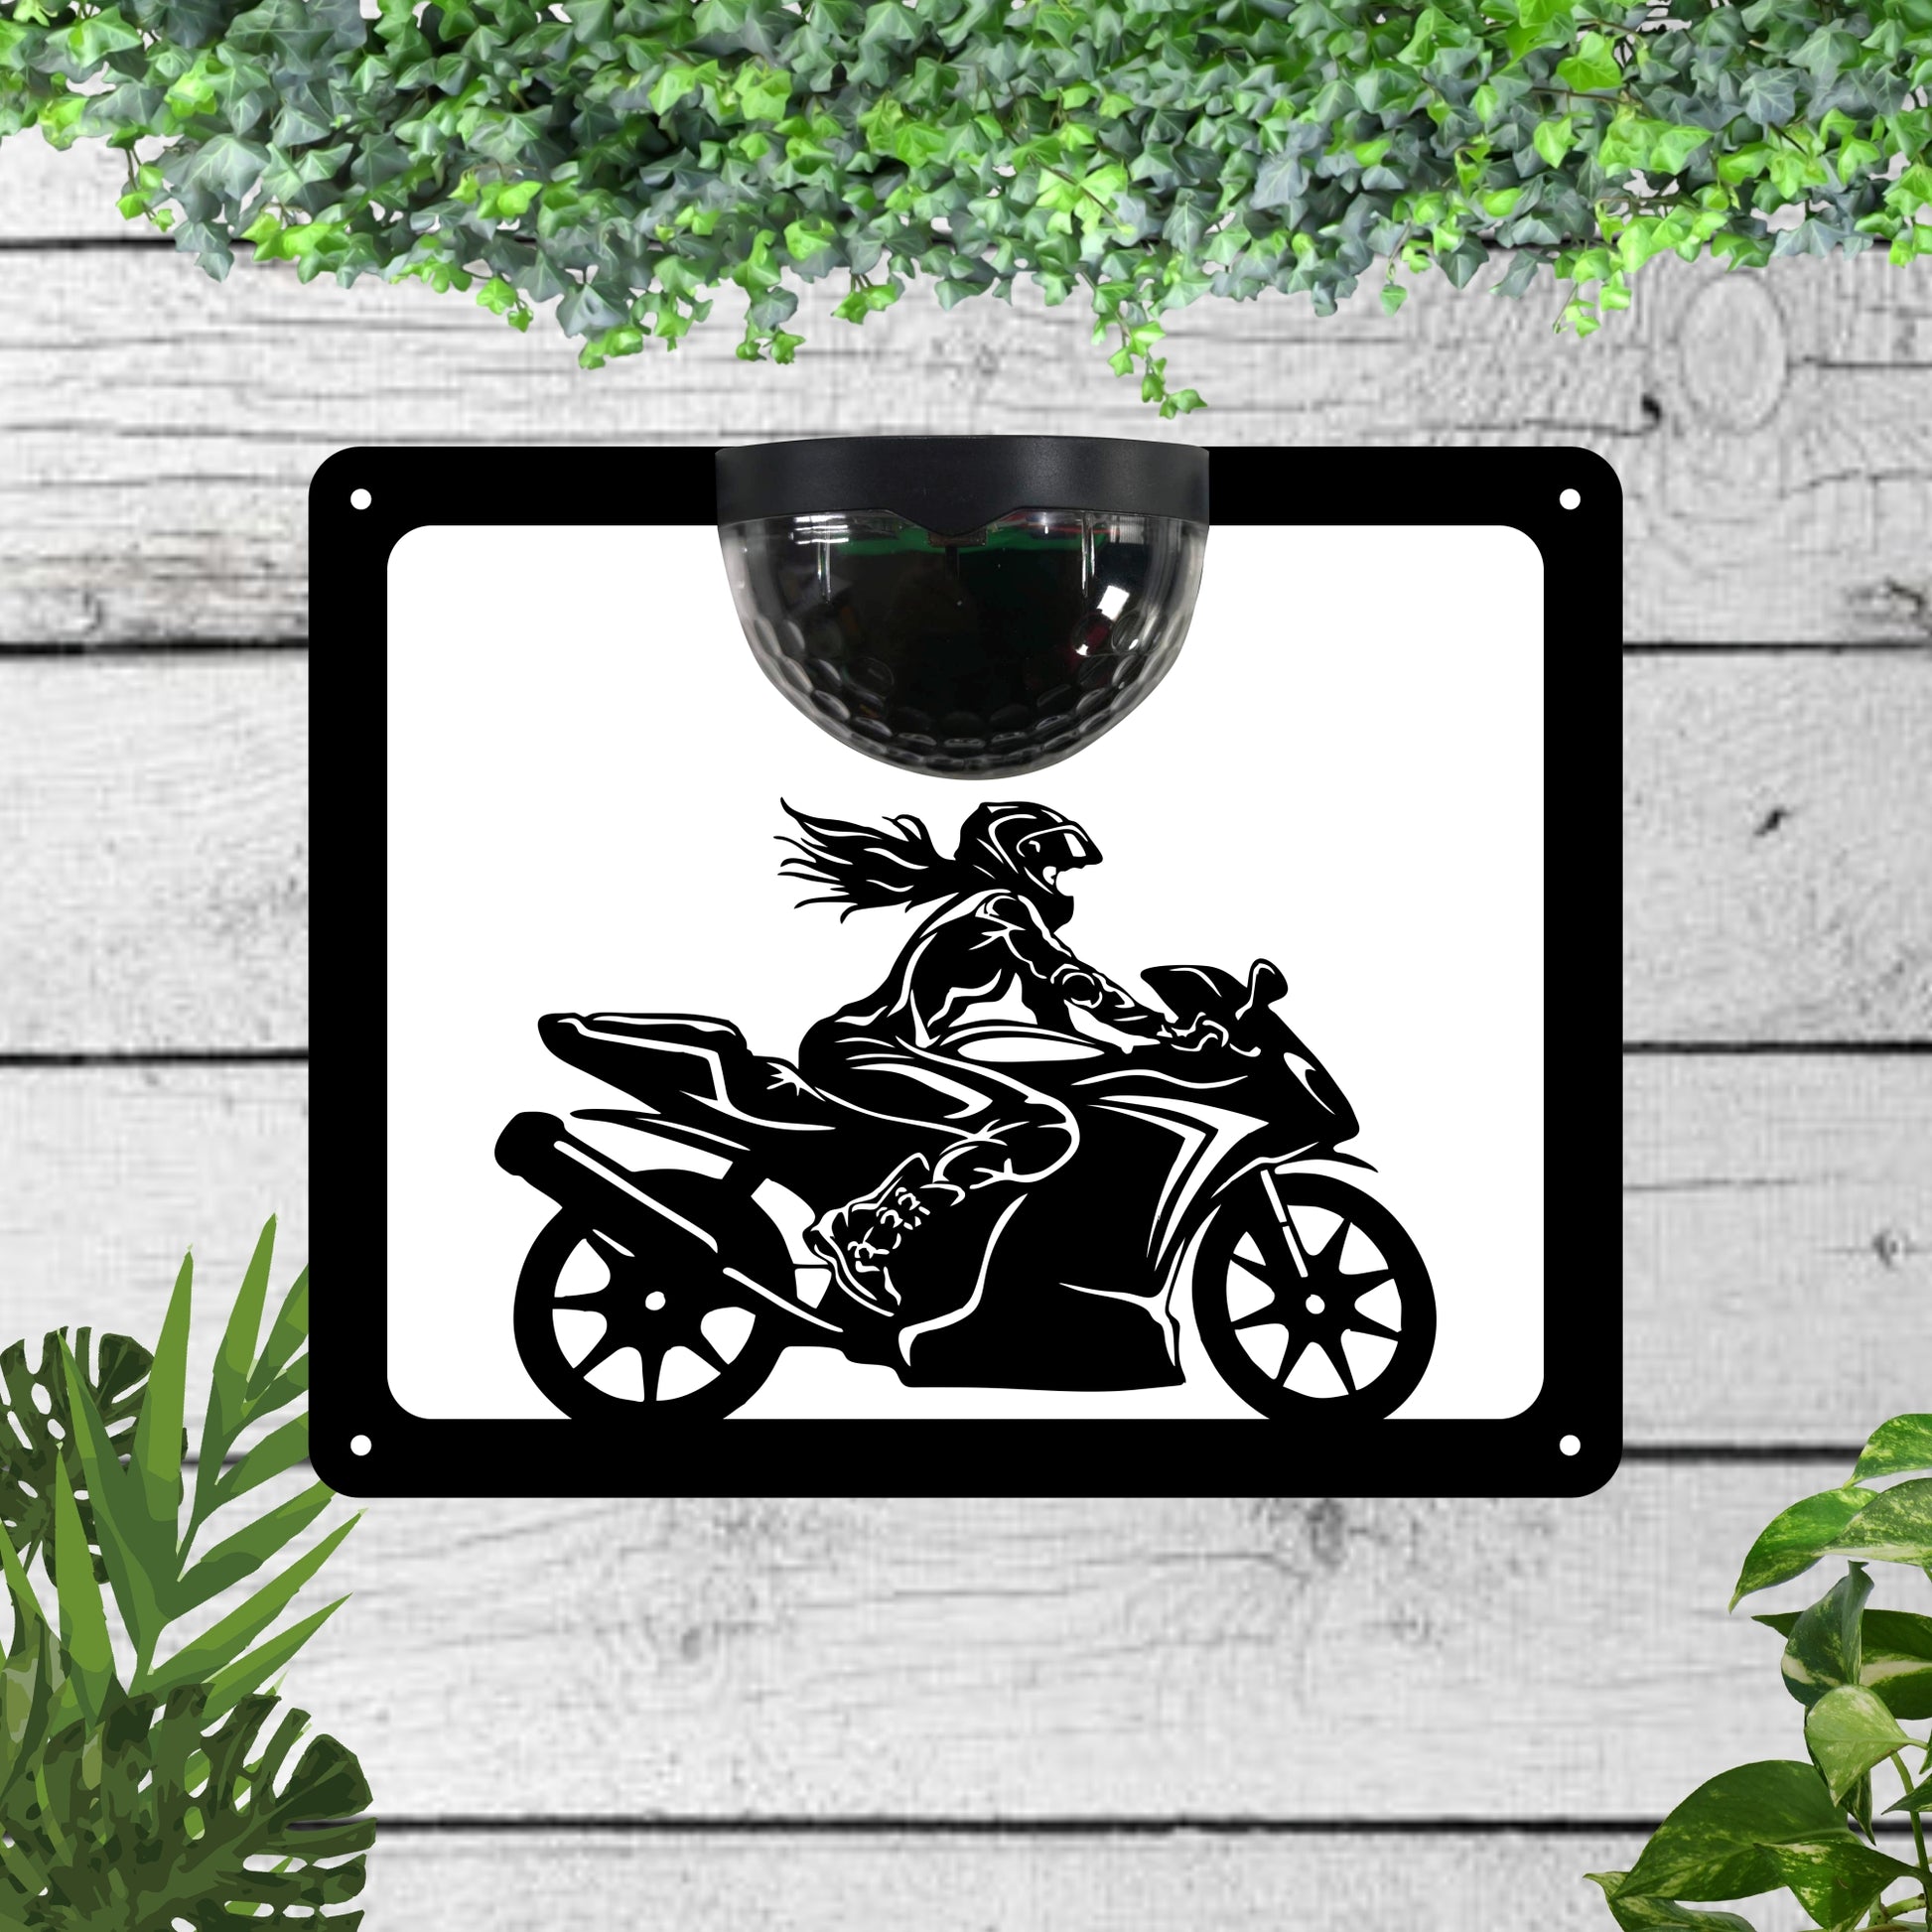 Garden Solar Light Wall Plaque With a Woman on a Motorbike | John Alans